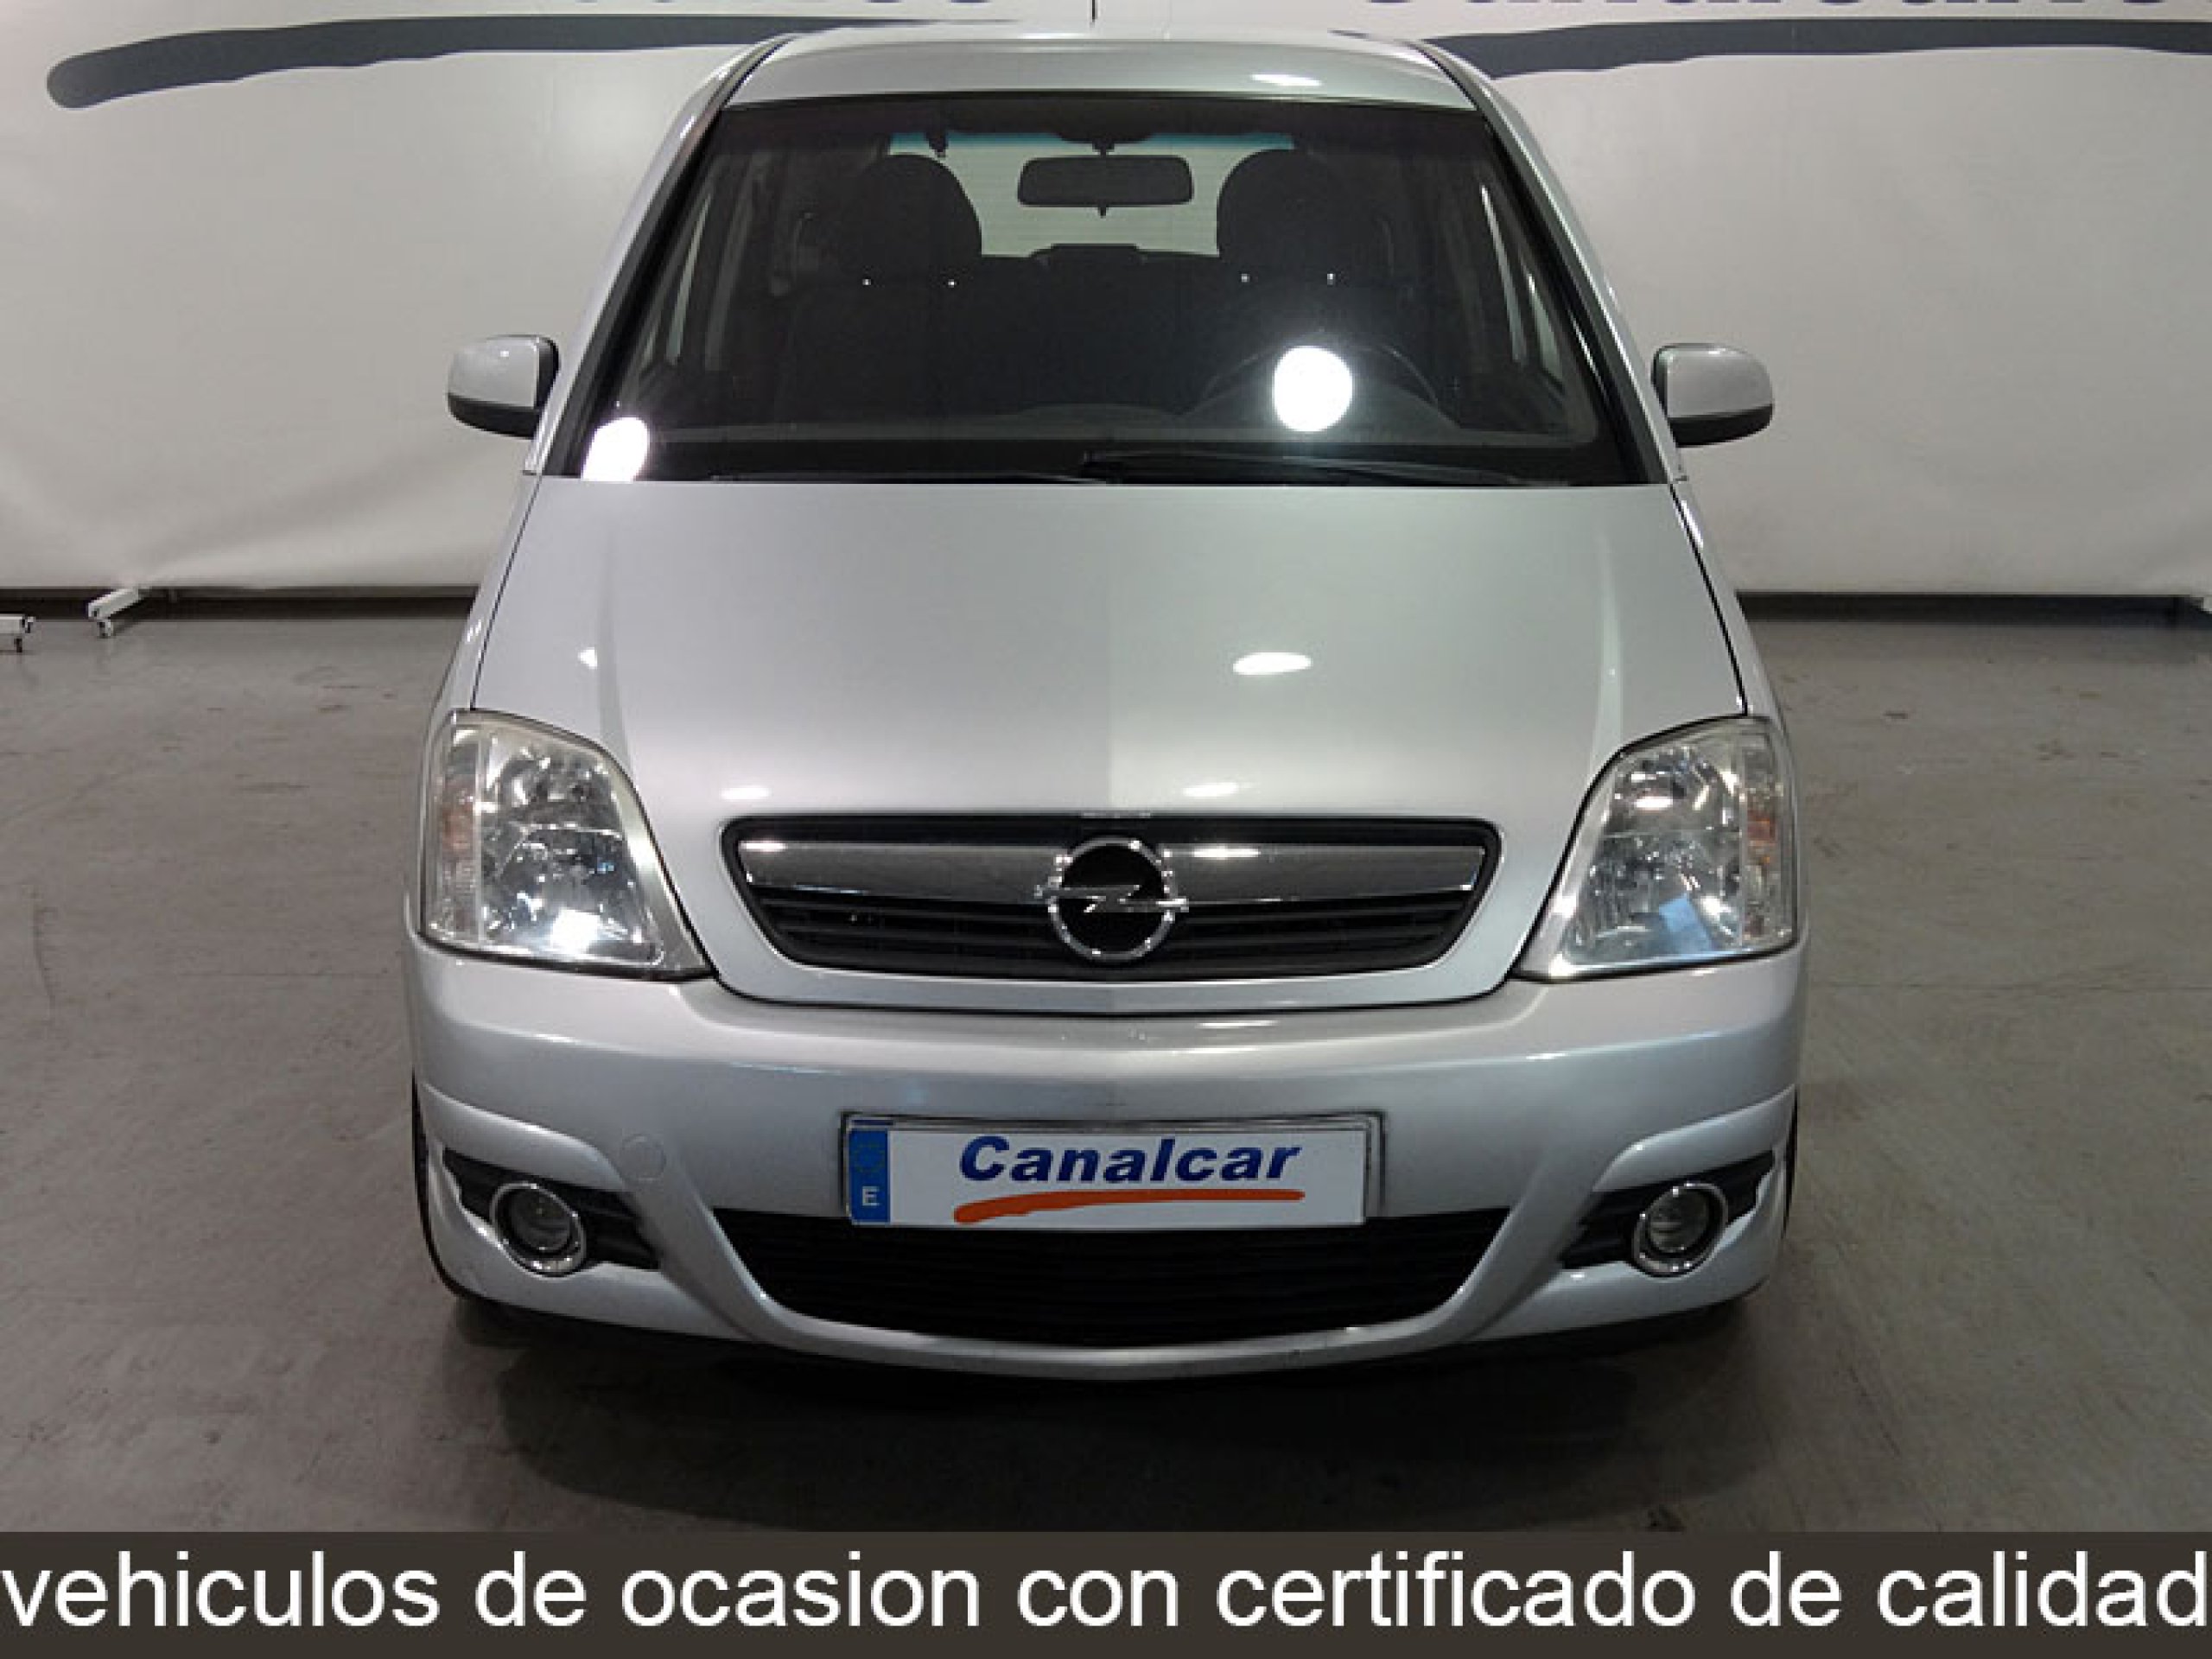 Oferta de Opel Meriva 1.7 CDTI Cosmo 100 CV en Canalcar (6880)